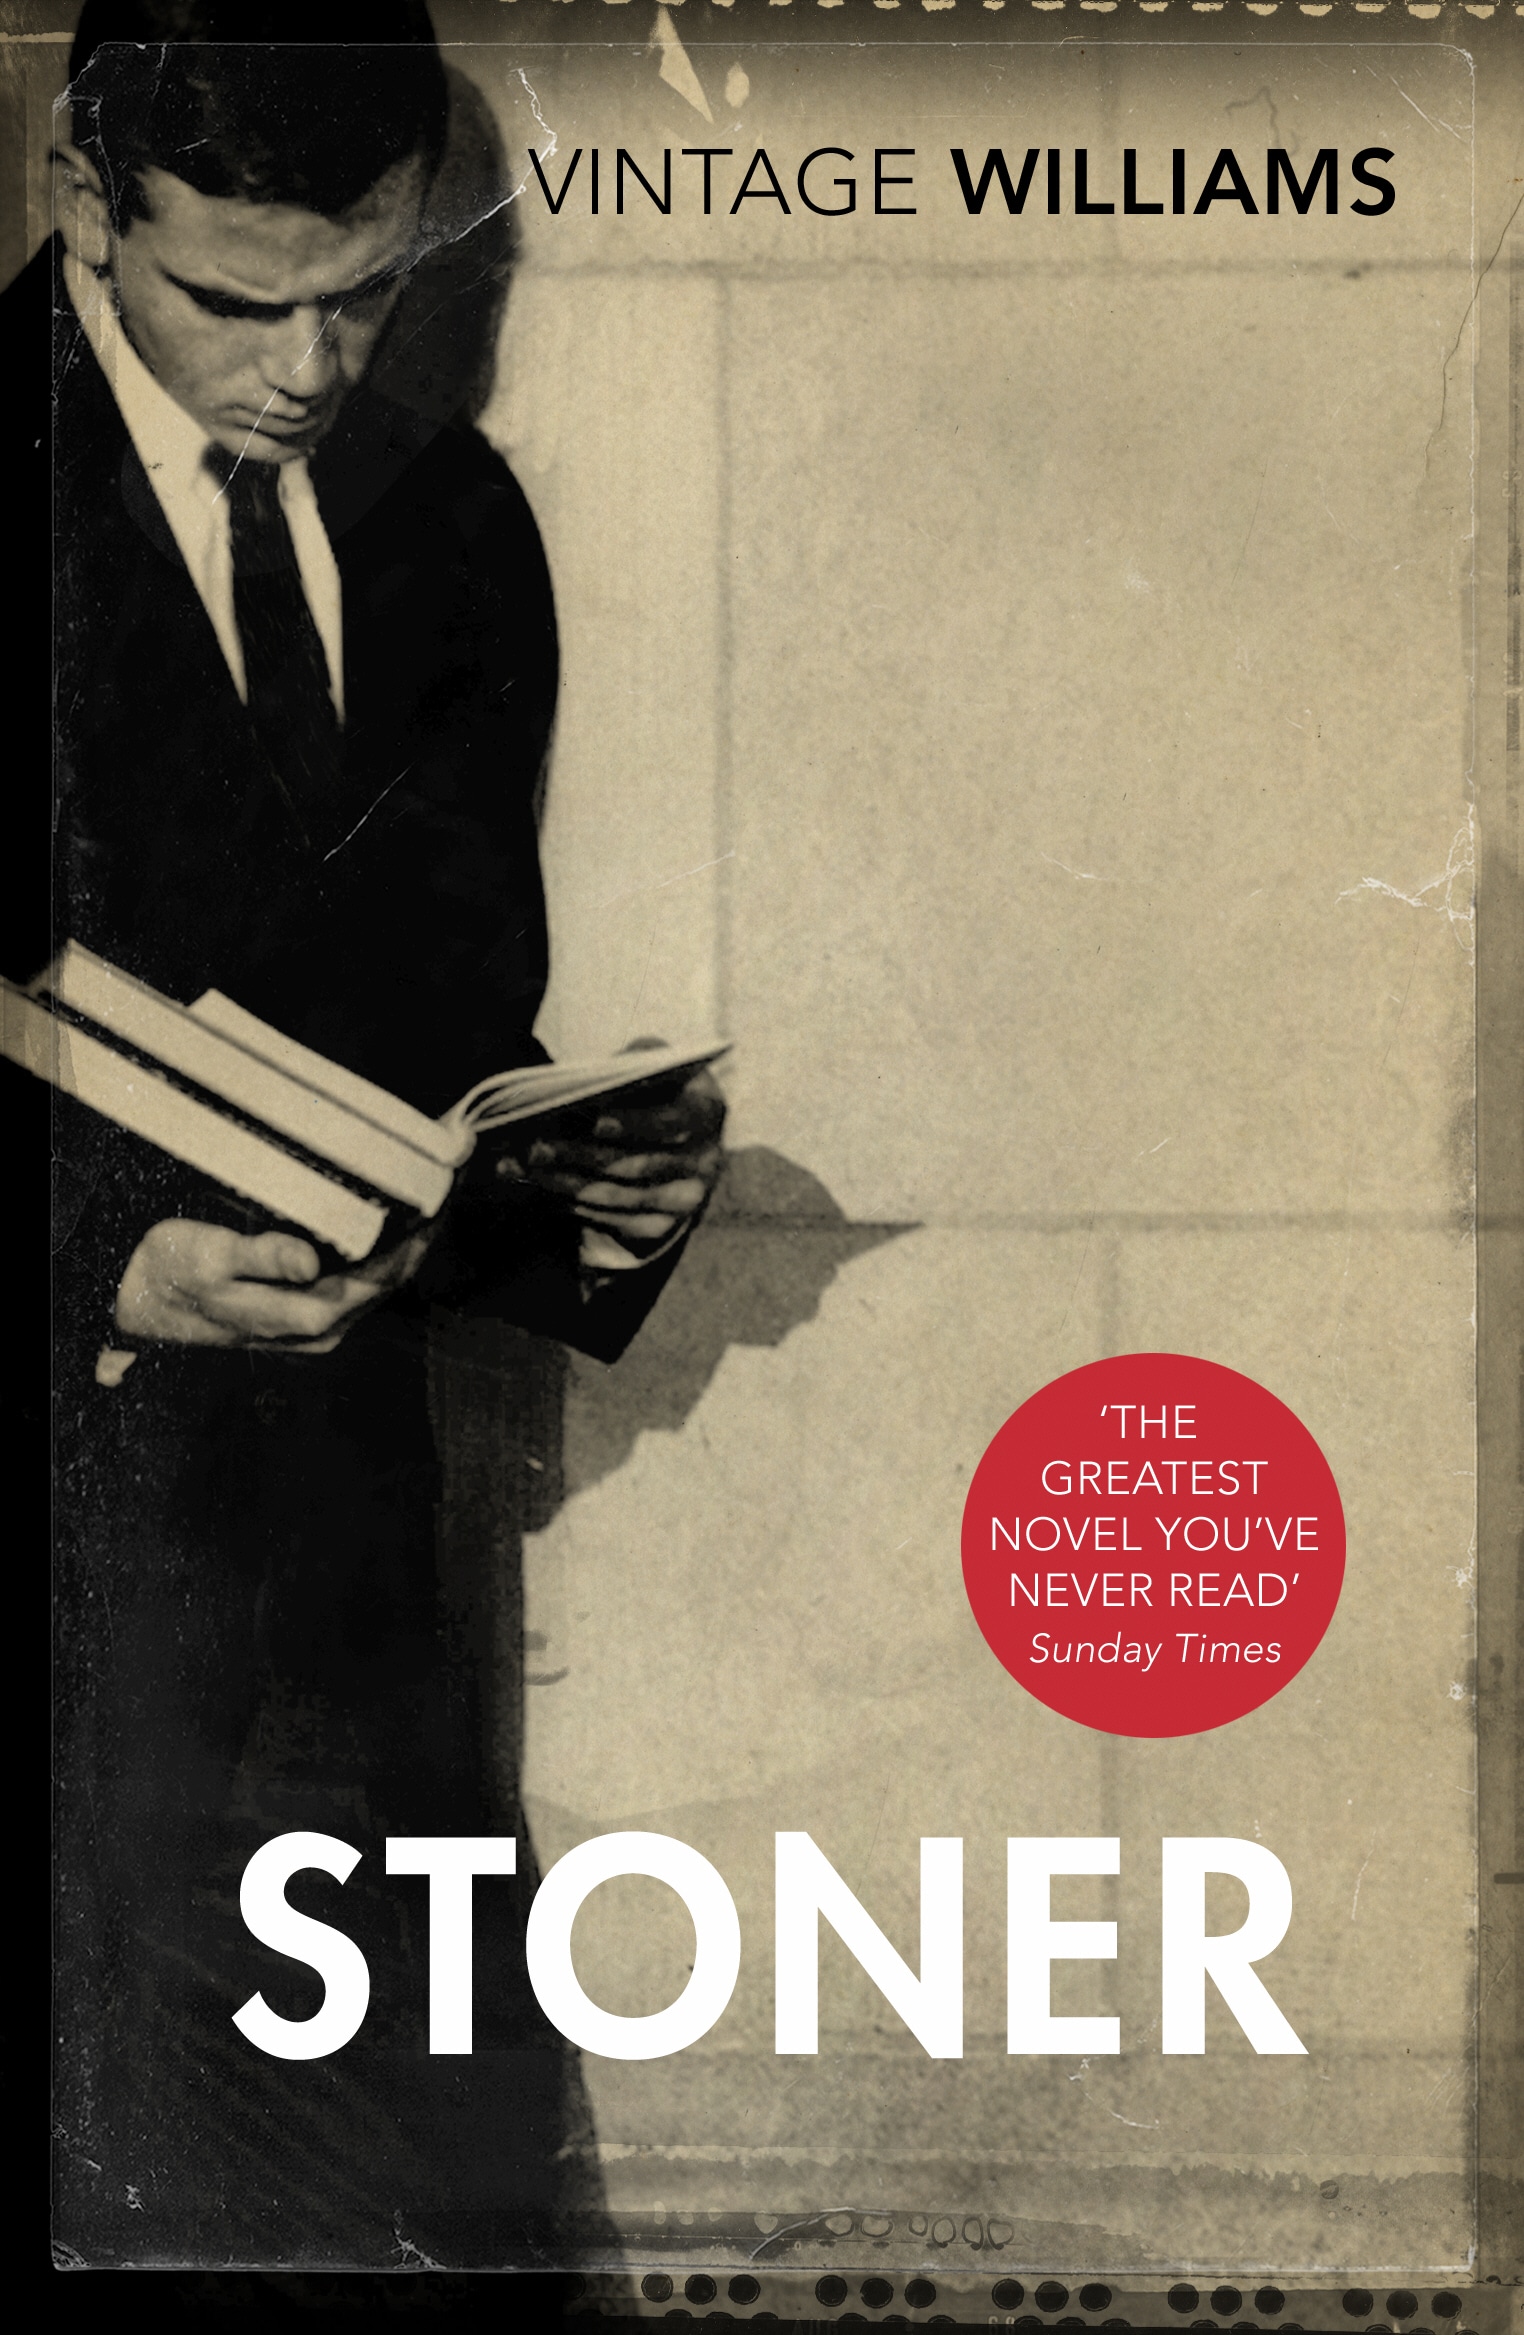 Book “Stoner” by John Williams, John McGahern — July 5, 2012